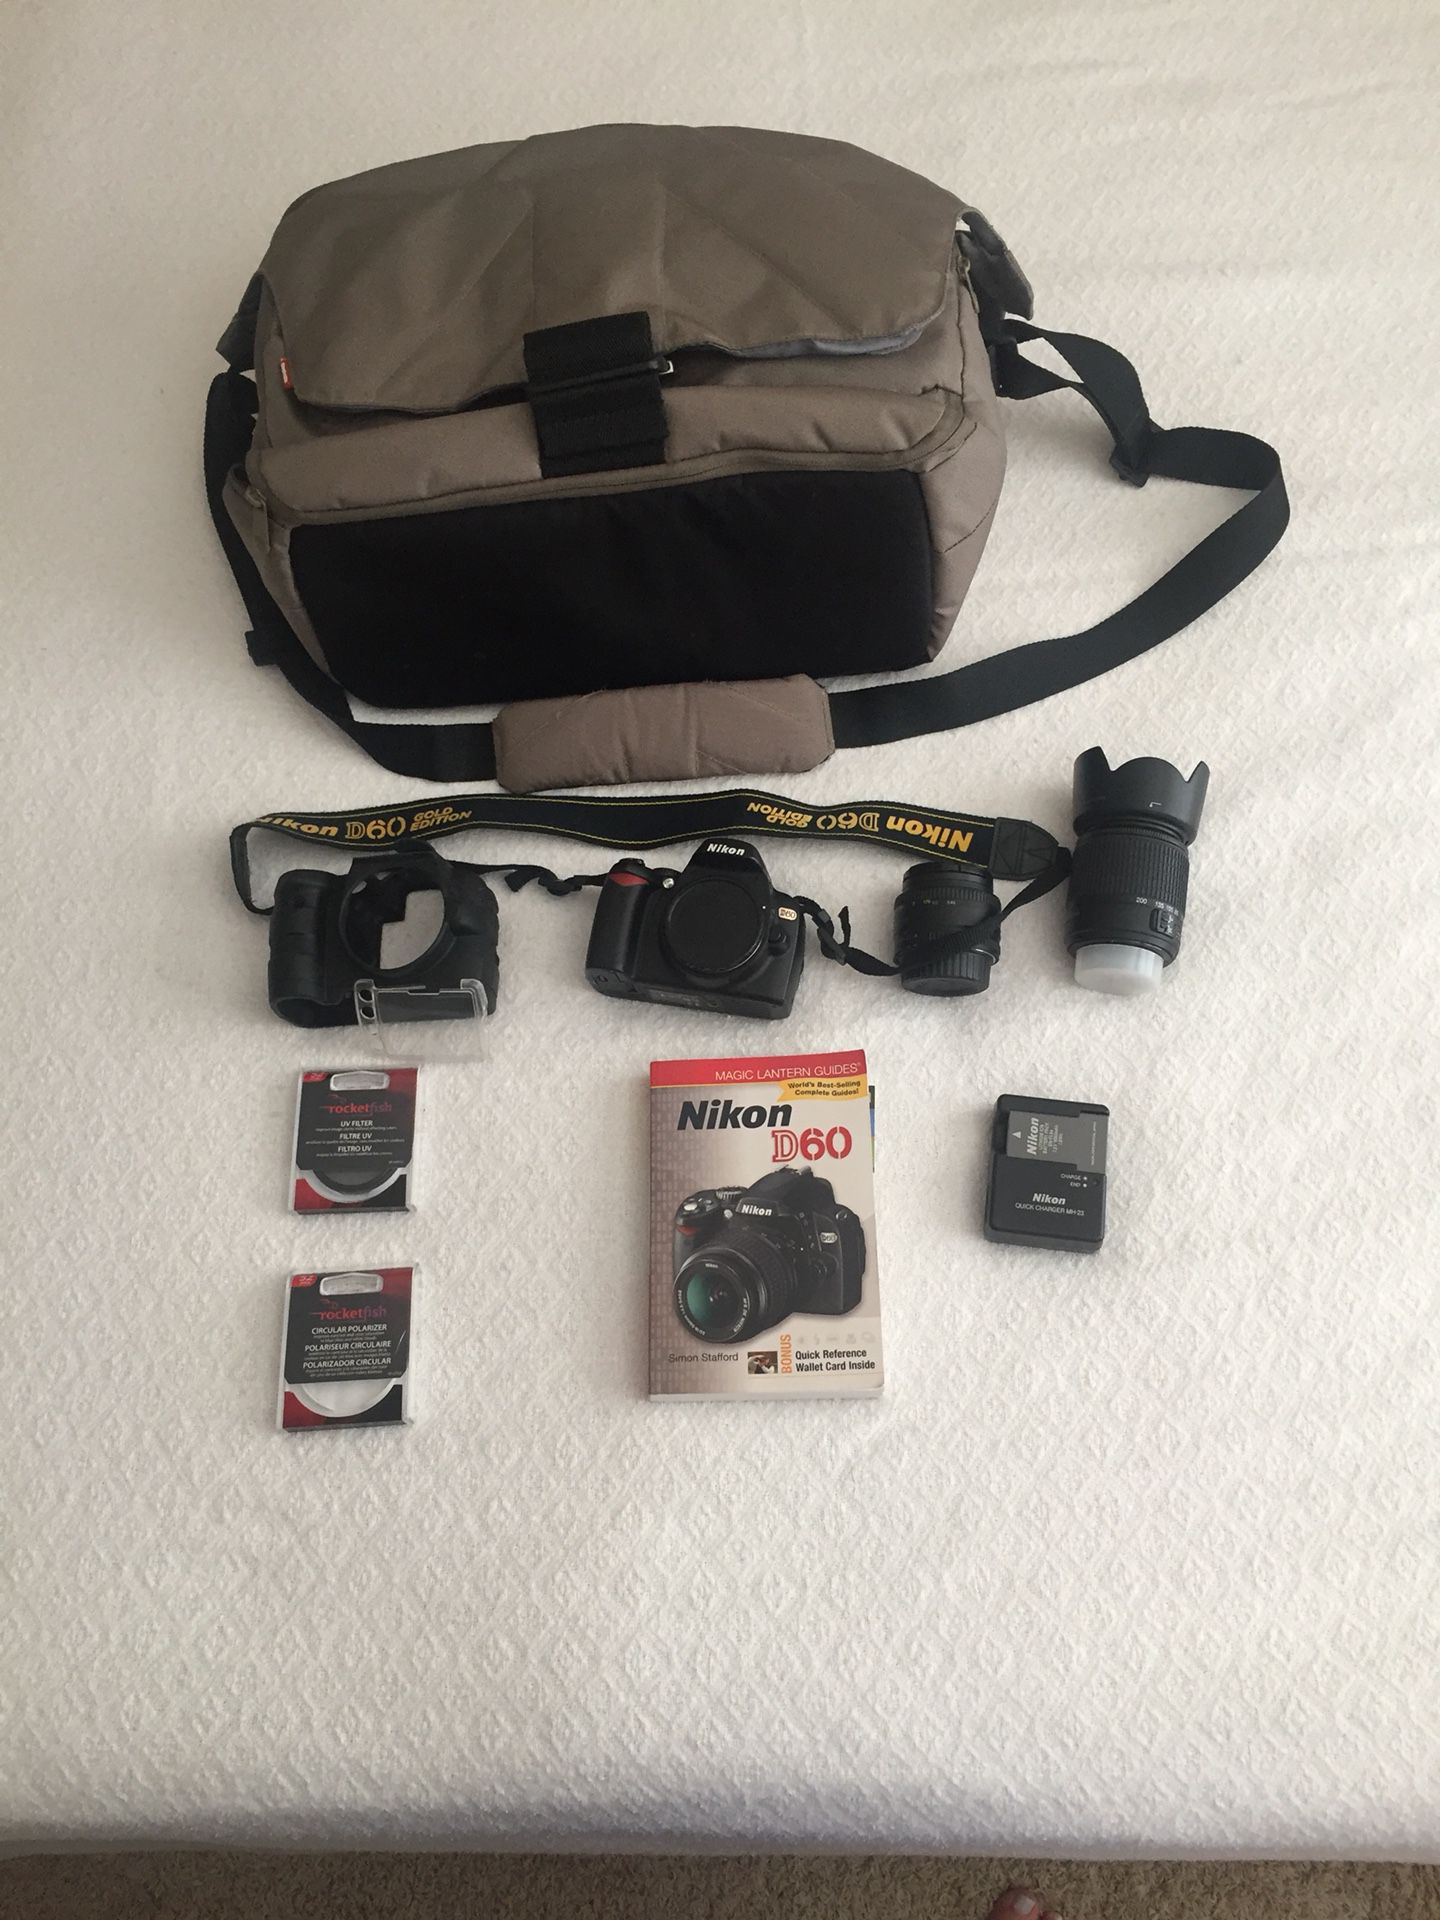 Nikon D60 with accessories, strobe lighting kit